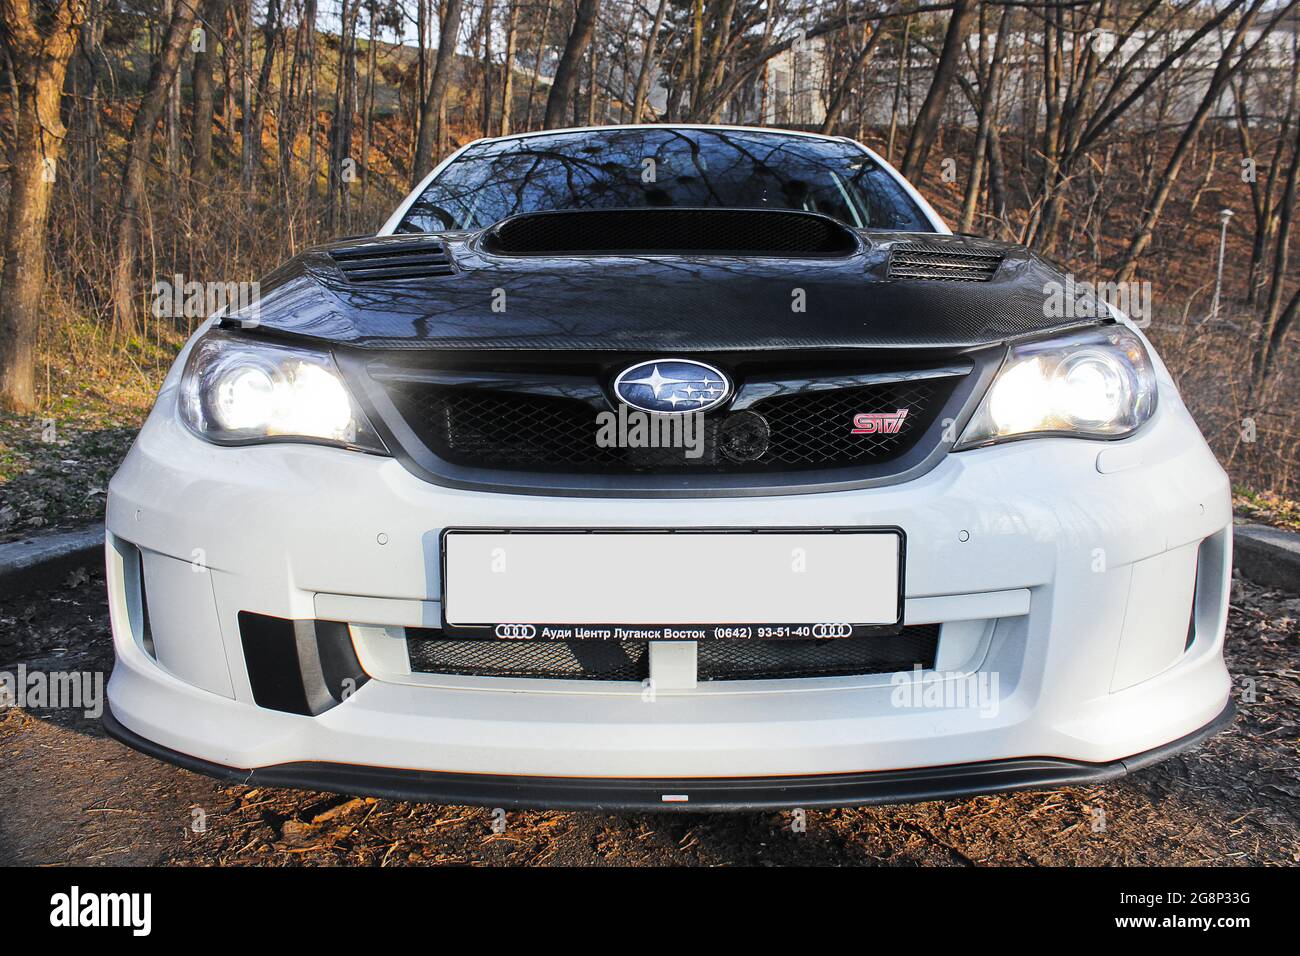 Kiev, Ukraine - March 25, 2015: Subaru Impreza WRX STI in the park. Japanese car on nature background Stock Photo